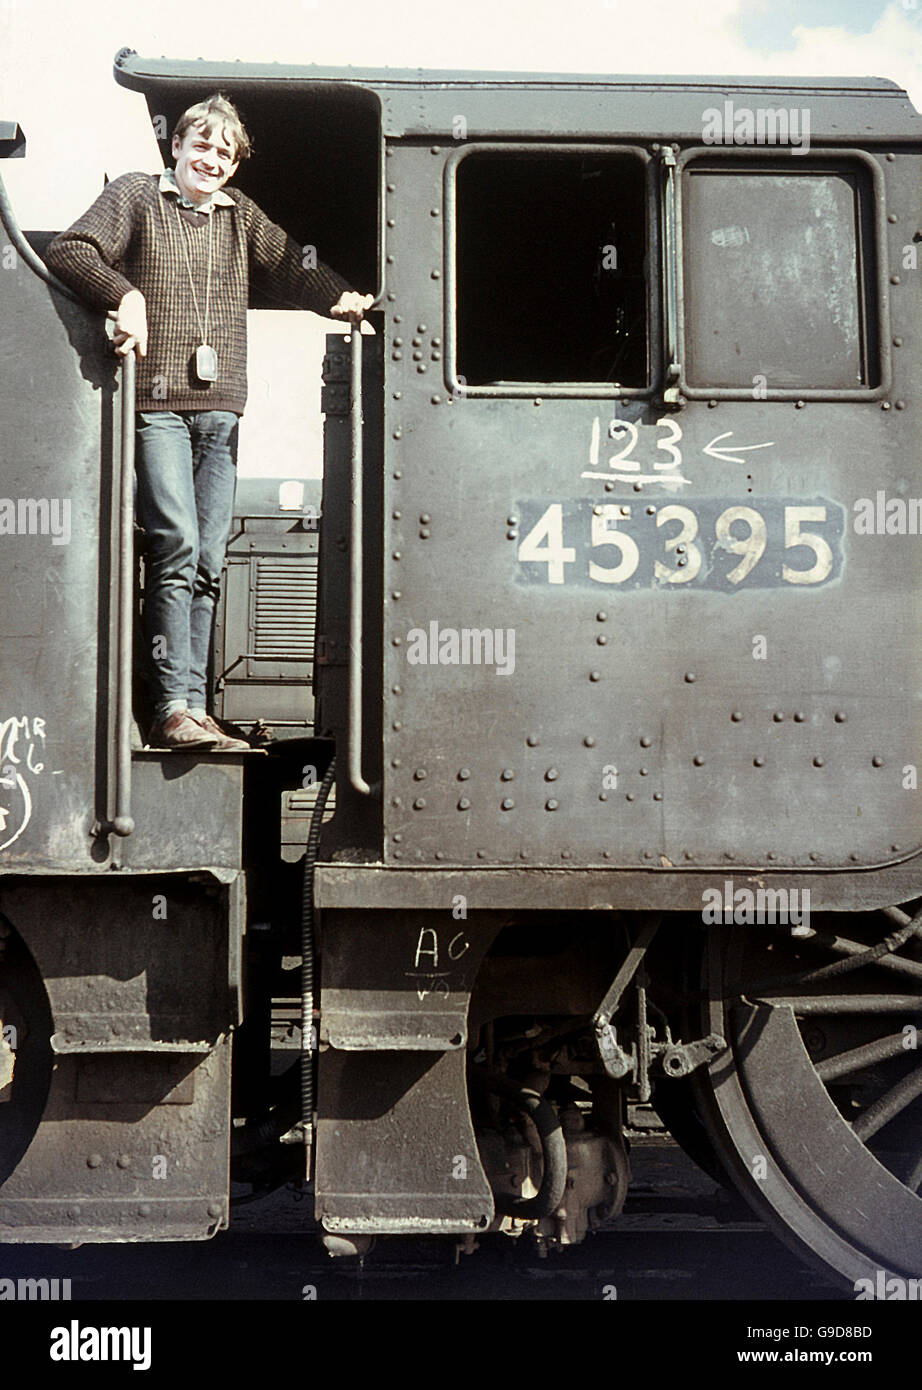 Colin garratt railway hi-res stock photography and images - Alamy